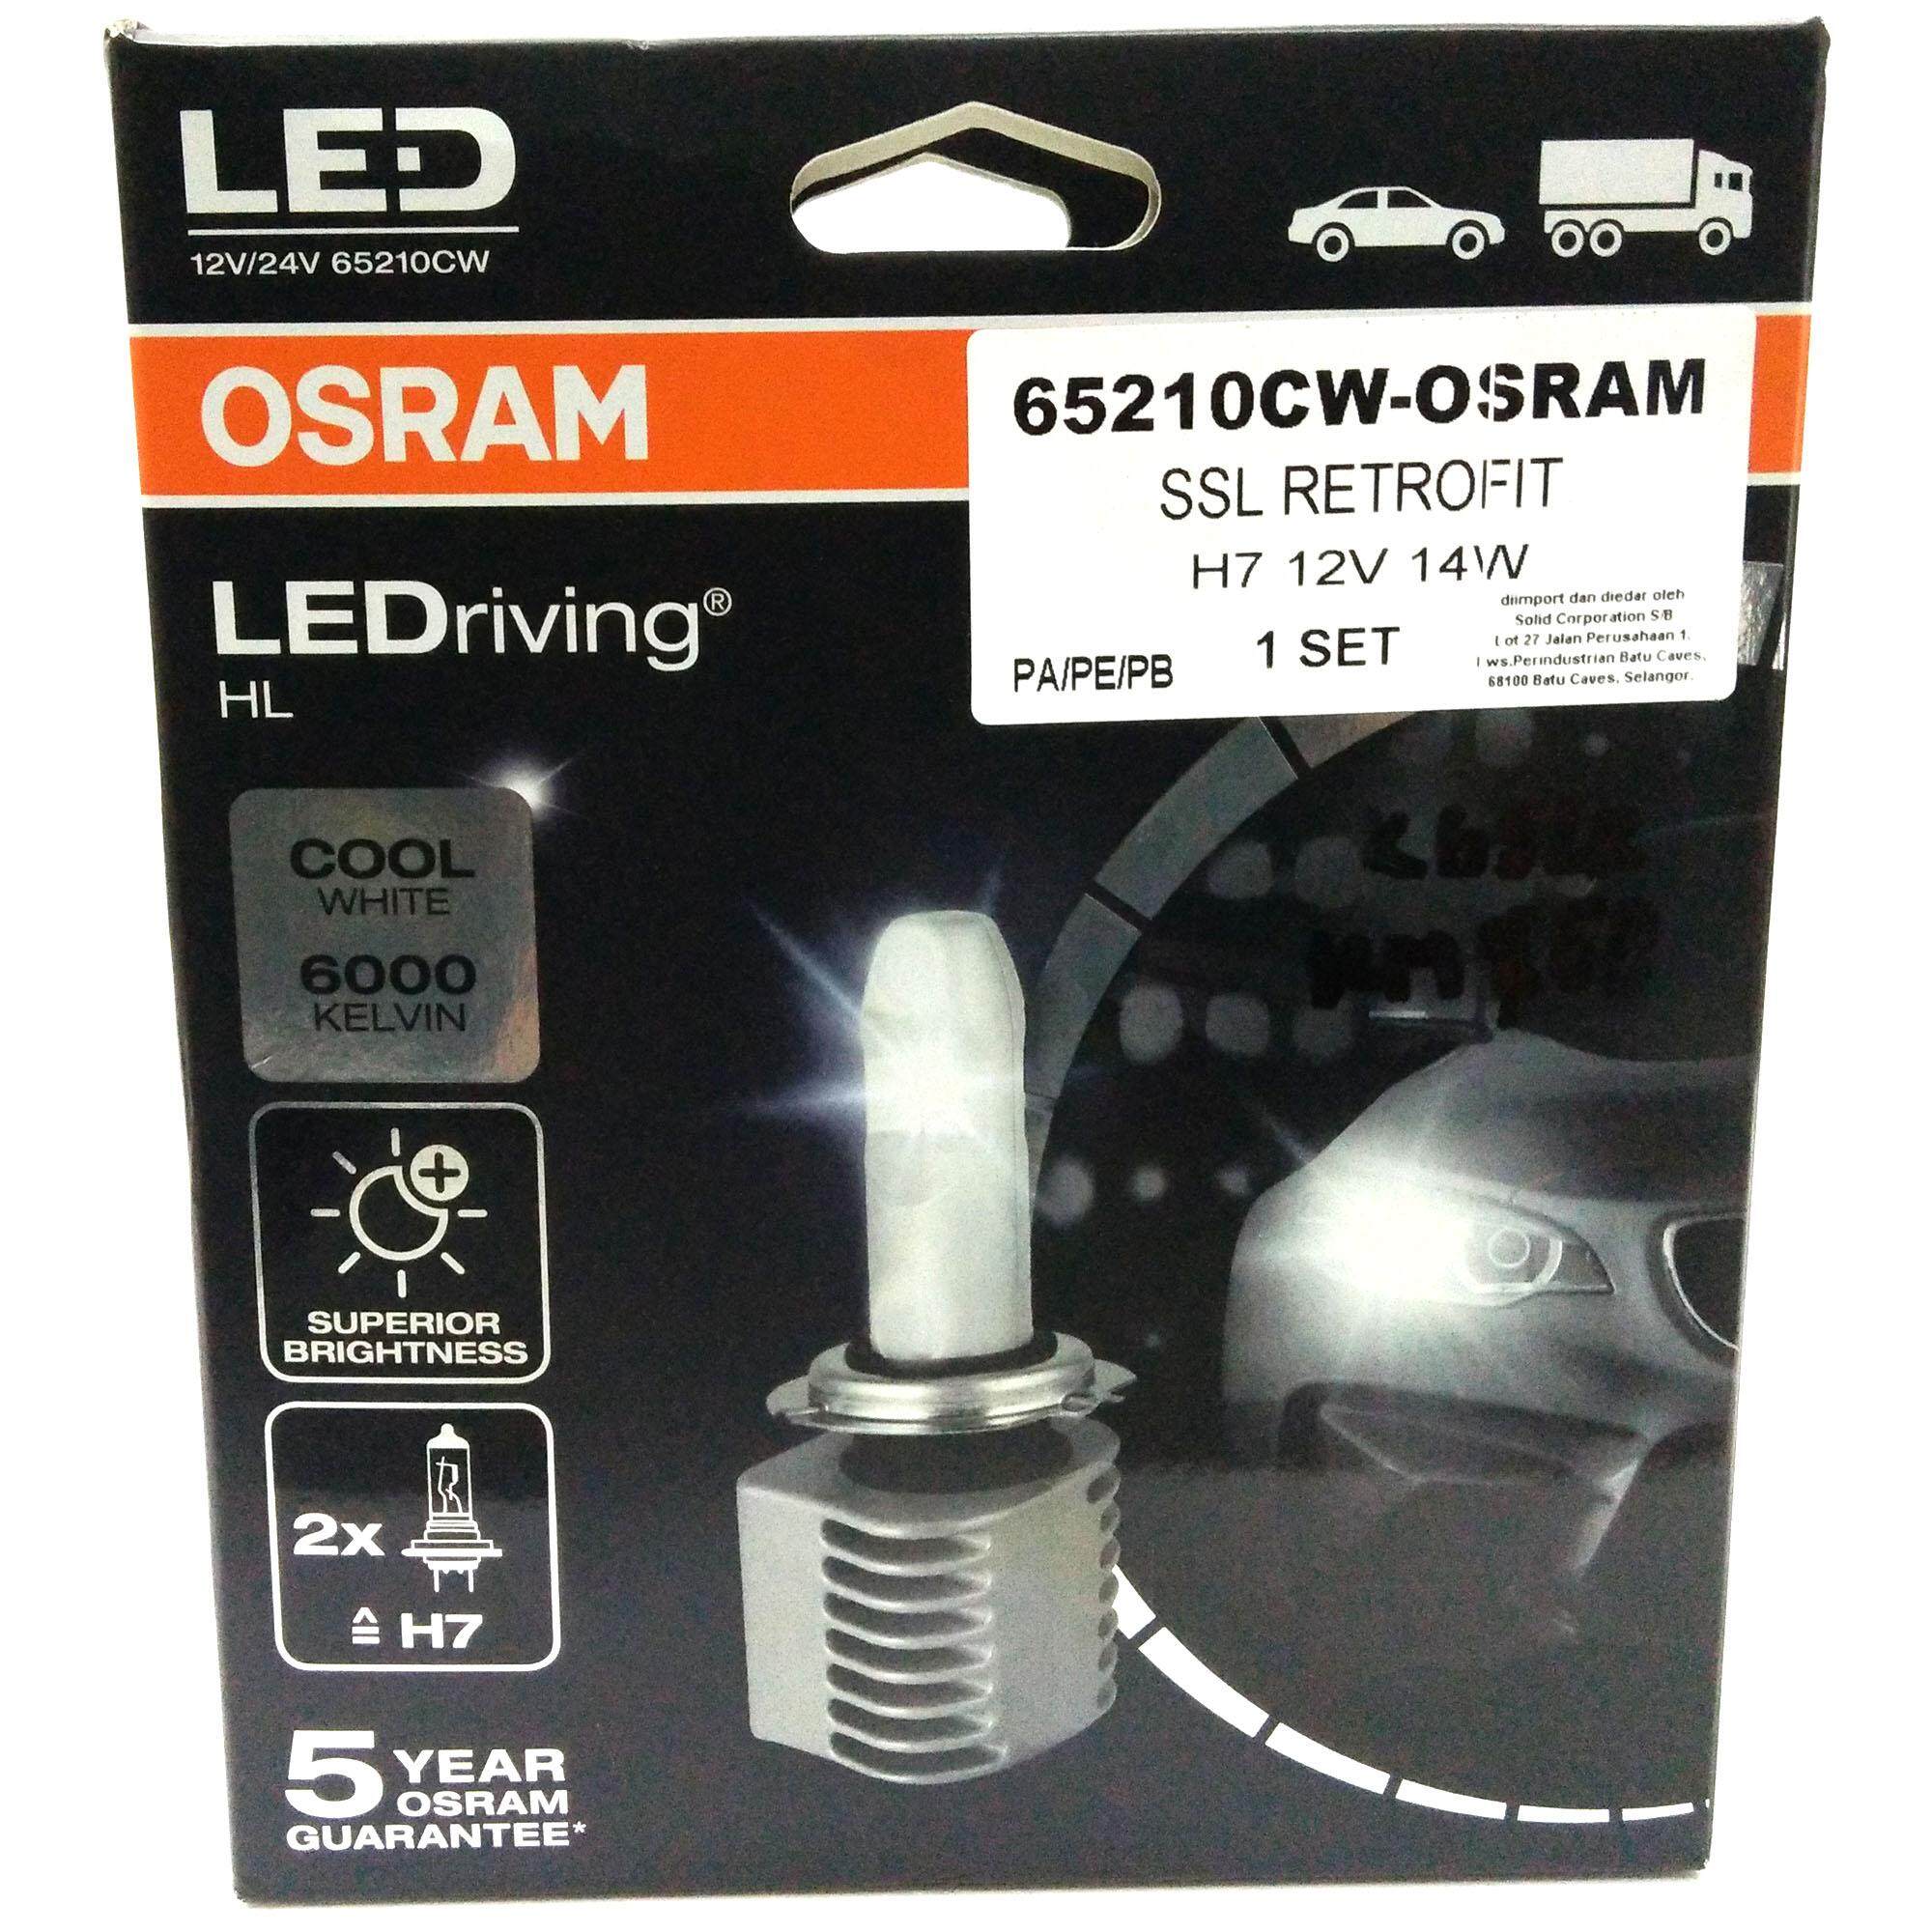 Osram led h7. 65210cw Osram. 67210cw Osram. 65210cw drive2. D5210cw h7.